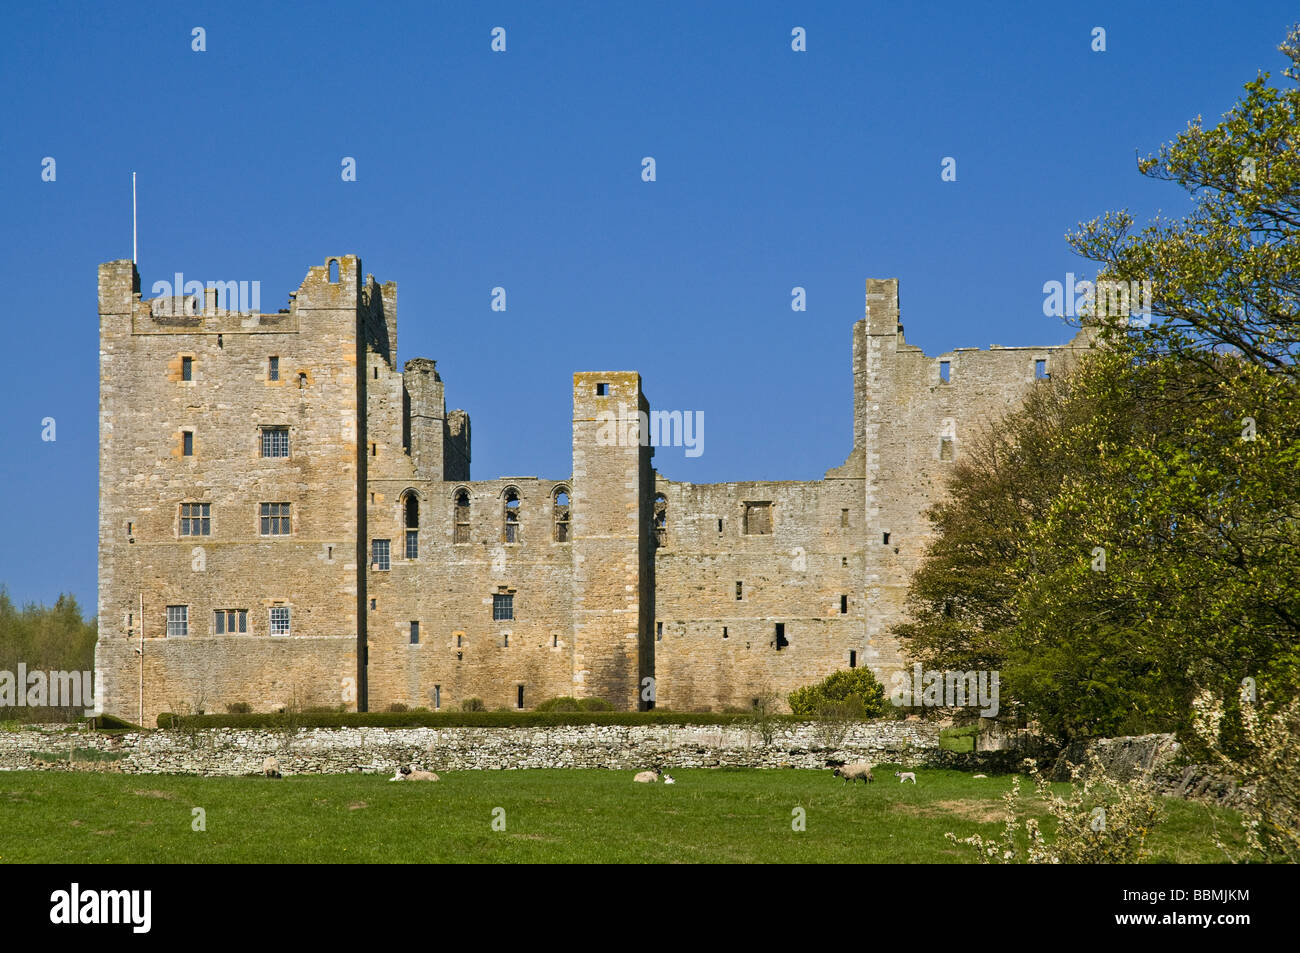 dh CASTELLO BOLTON NORTH YORKSHIRE Castello medievale Wensleydale Yorkshire Dales National Park inglese castelli inghilterra regno unito Foto Stock